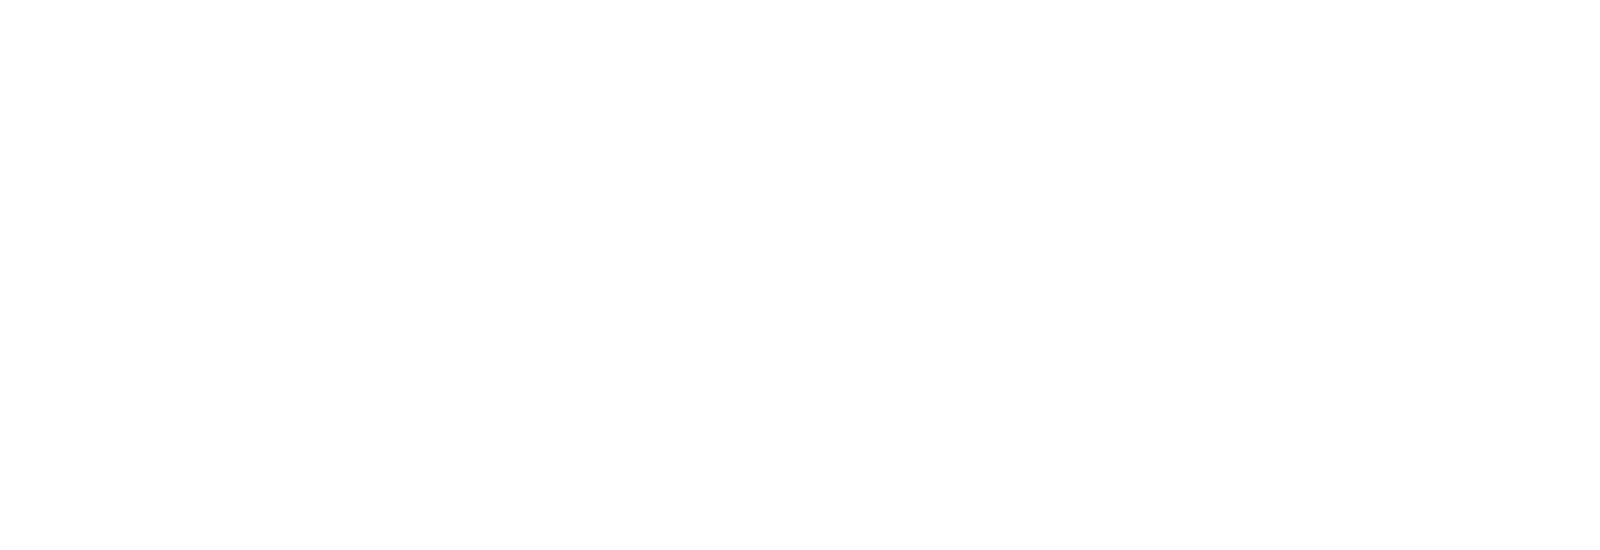 Facturalo Guatemala